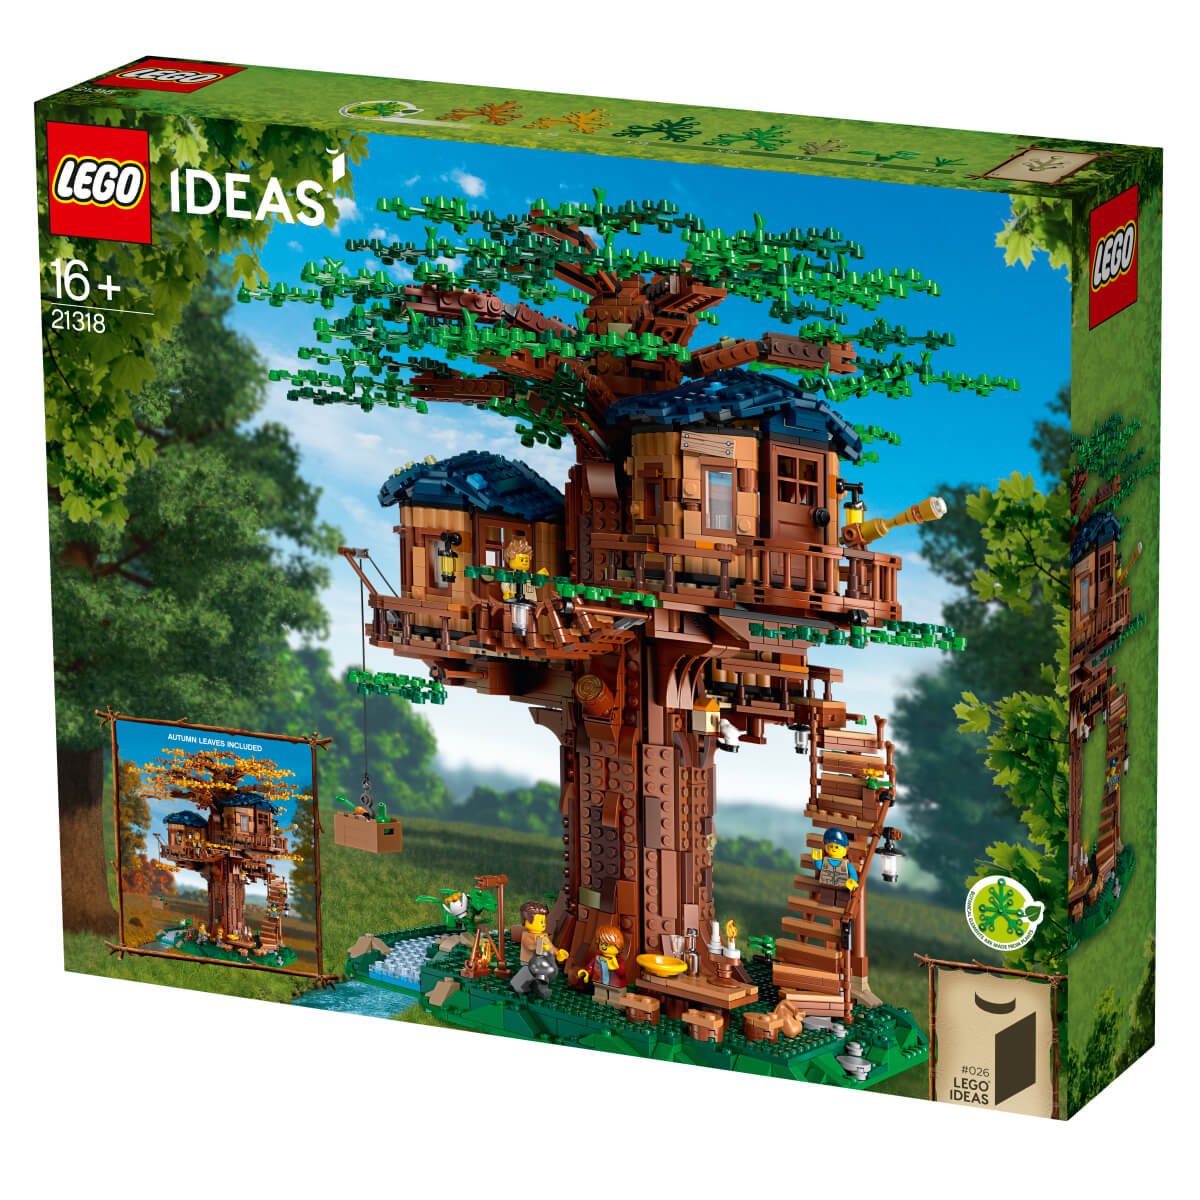 Köp LEGO Creator Expert 21318 Trädkoja